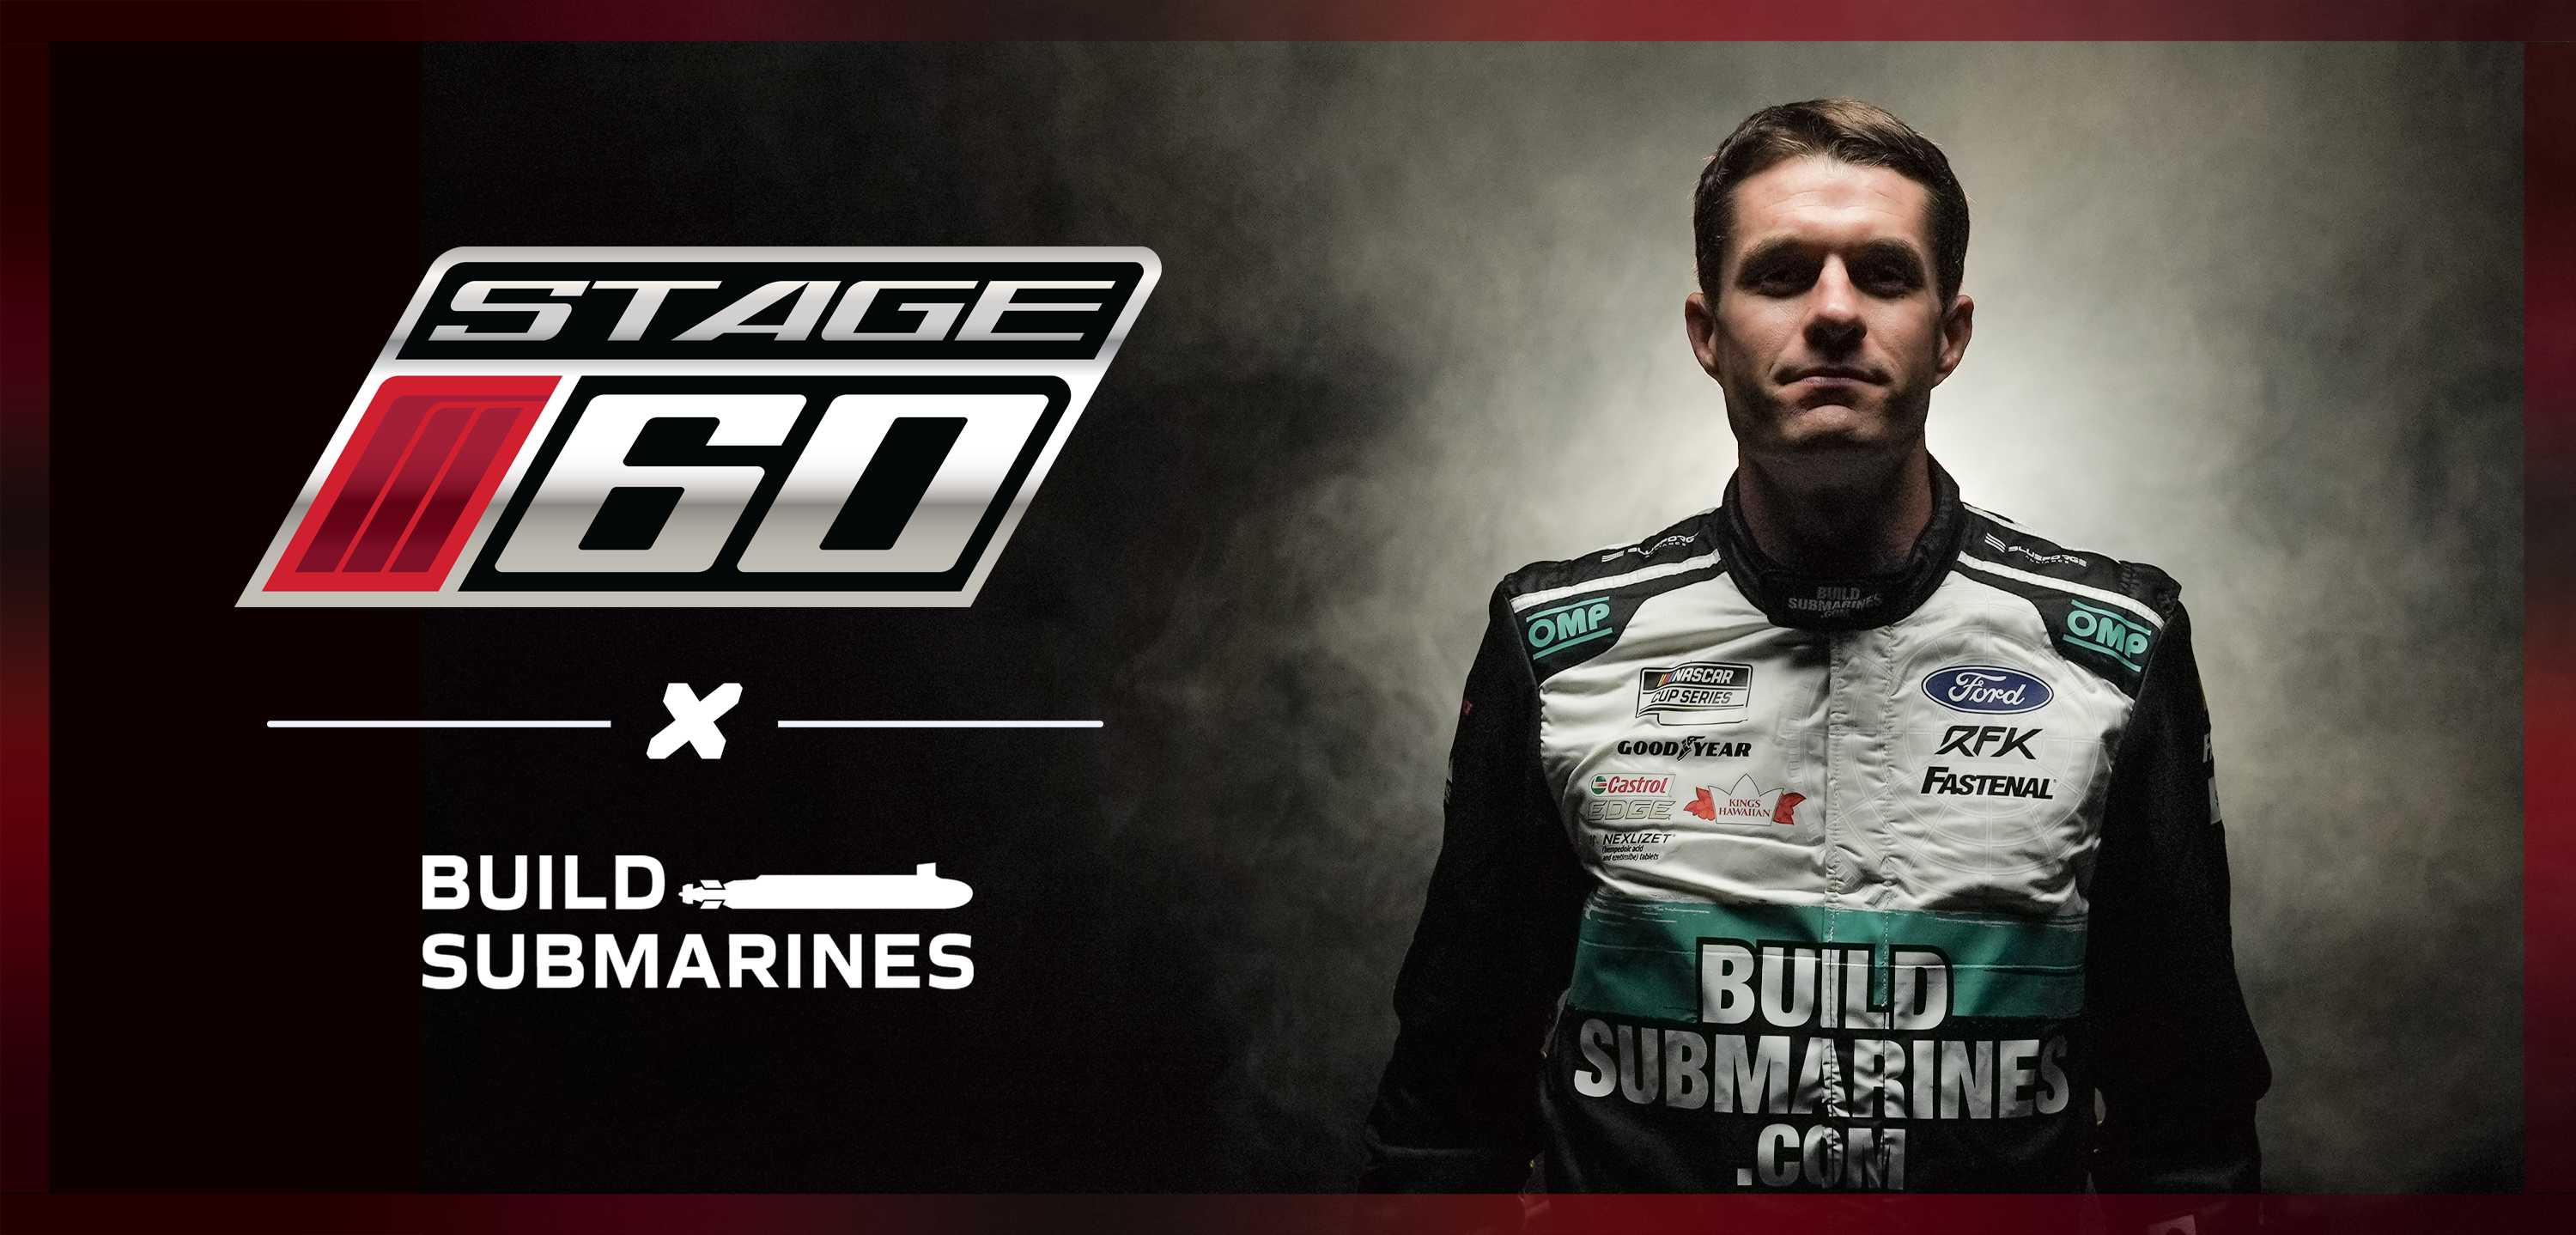 RFK Racing Announces #Stage60, BuildSubmarines.com to Partner for Team’s Third Daytona 500 Entry